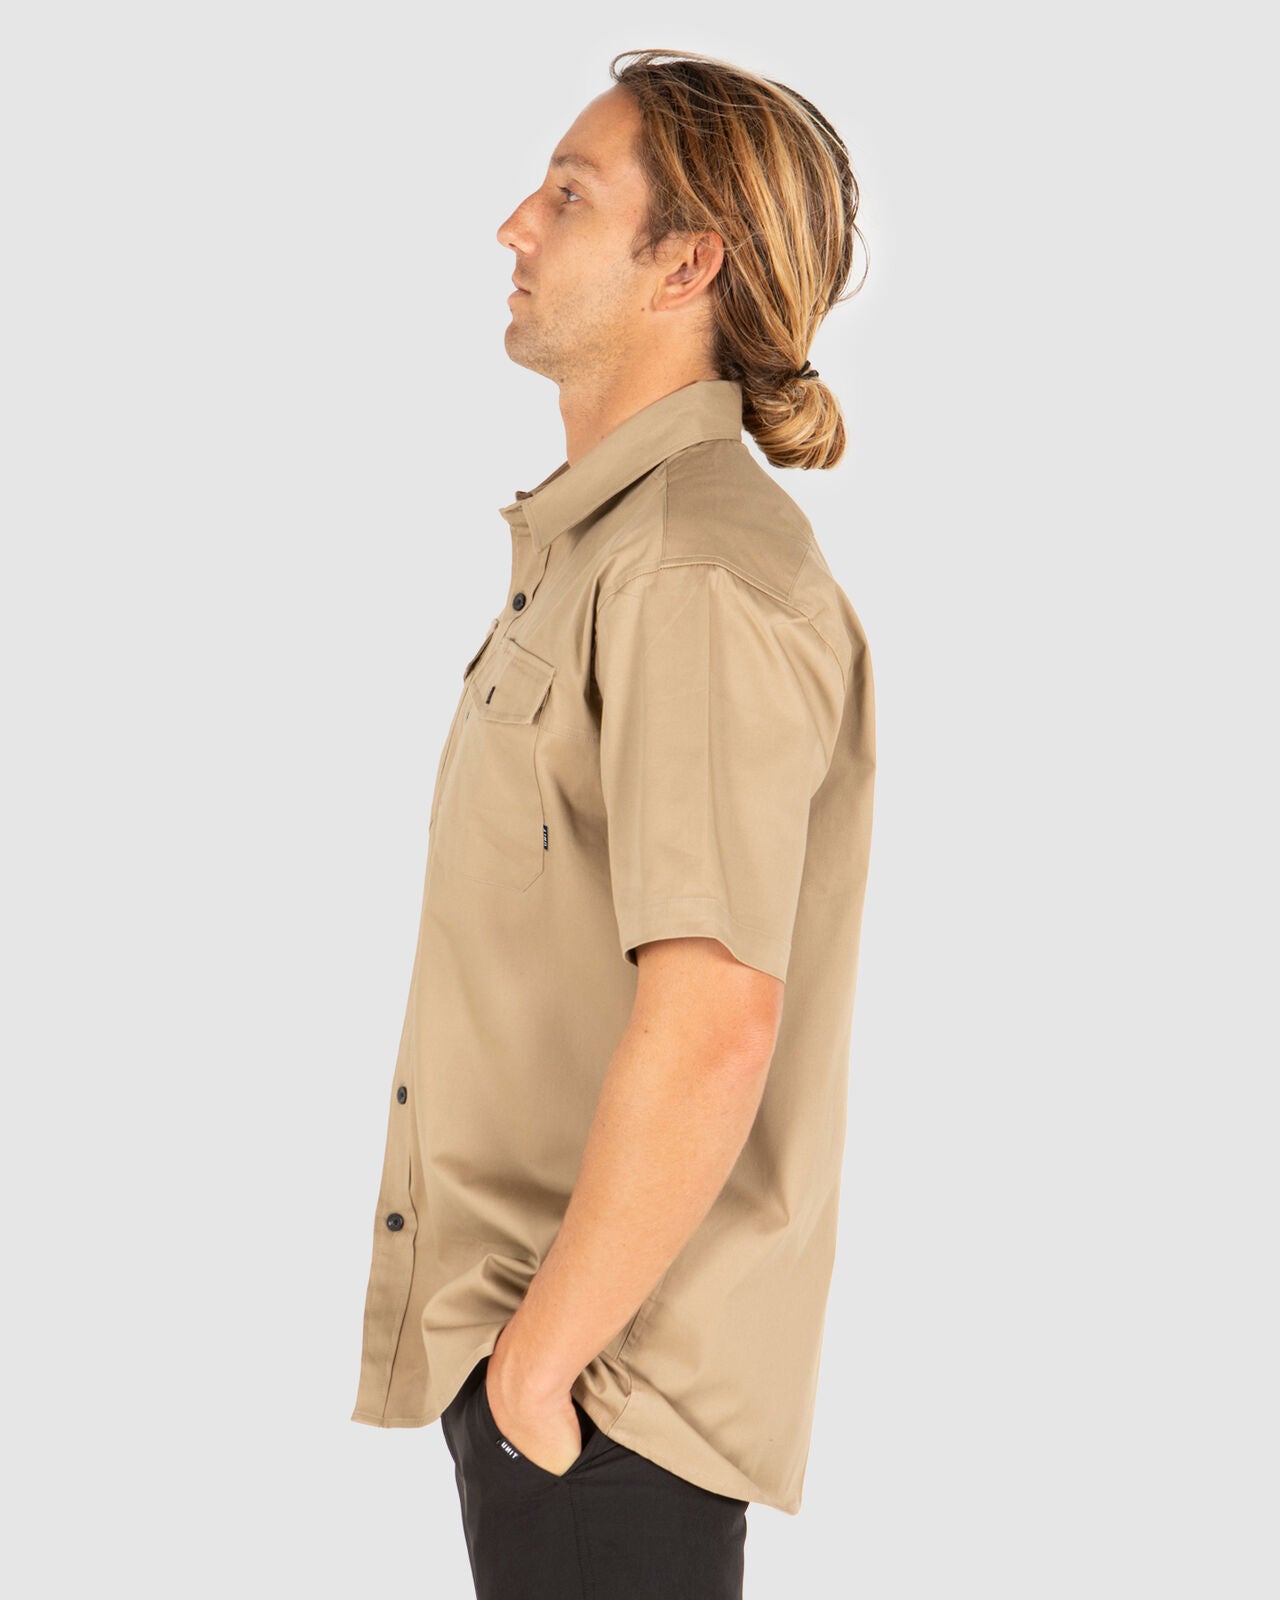 Unit Mens Work Shirt - Task - Short Sleeve